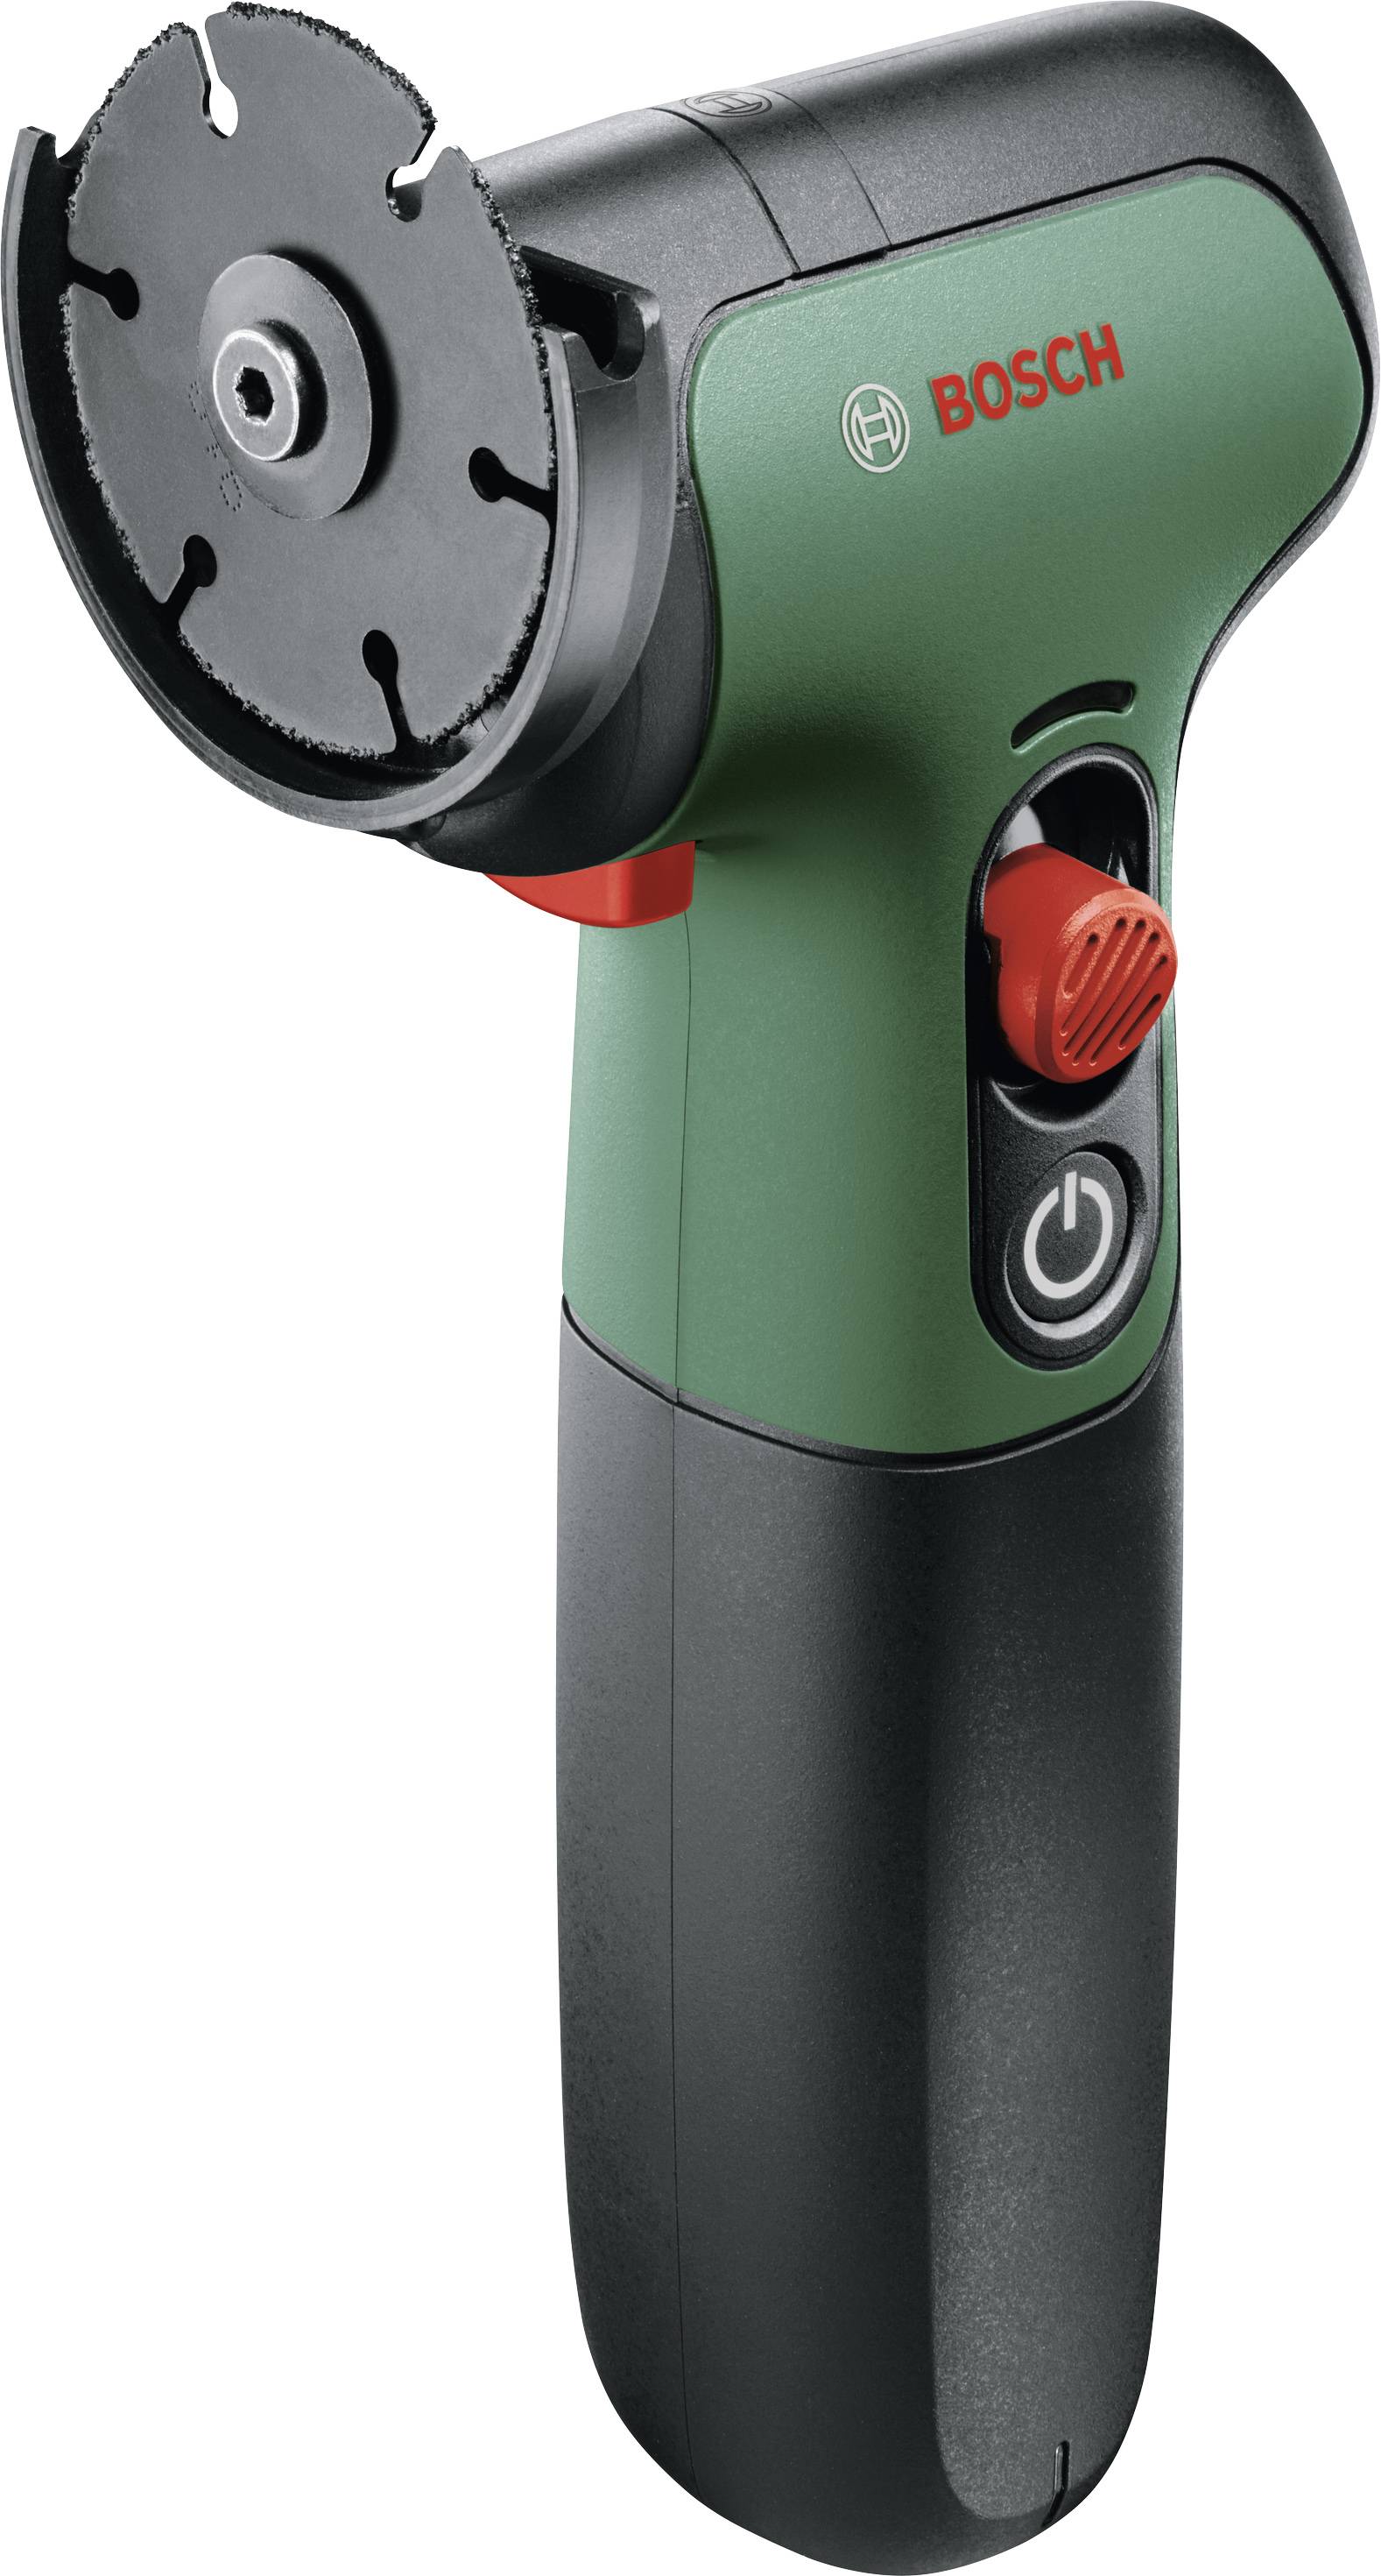 Bosch and Easy Cut & Grind 06039D2000 Cordless angle grinder mm 7.2 V 2.0 Ah | Conrad.com